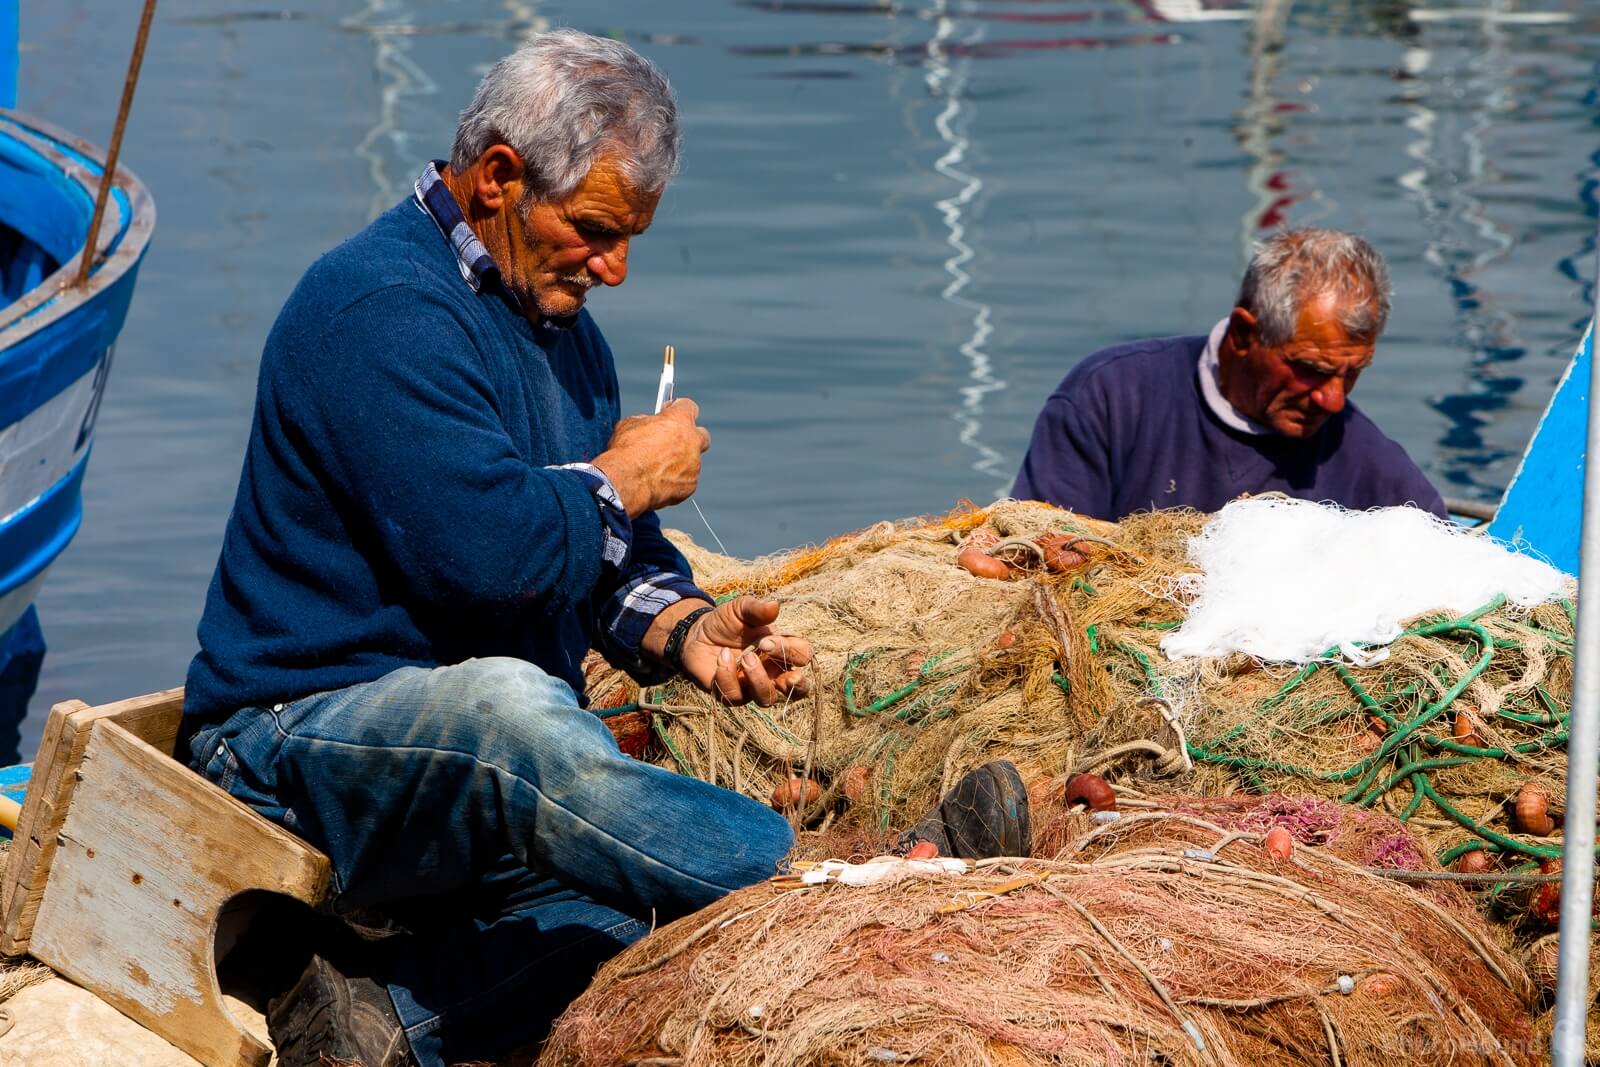 Image of Pozzuoli – Fish Market and Fisherman by the Port by Raimondo Giamberduca